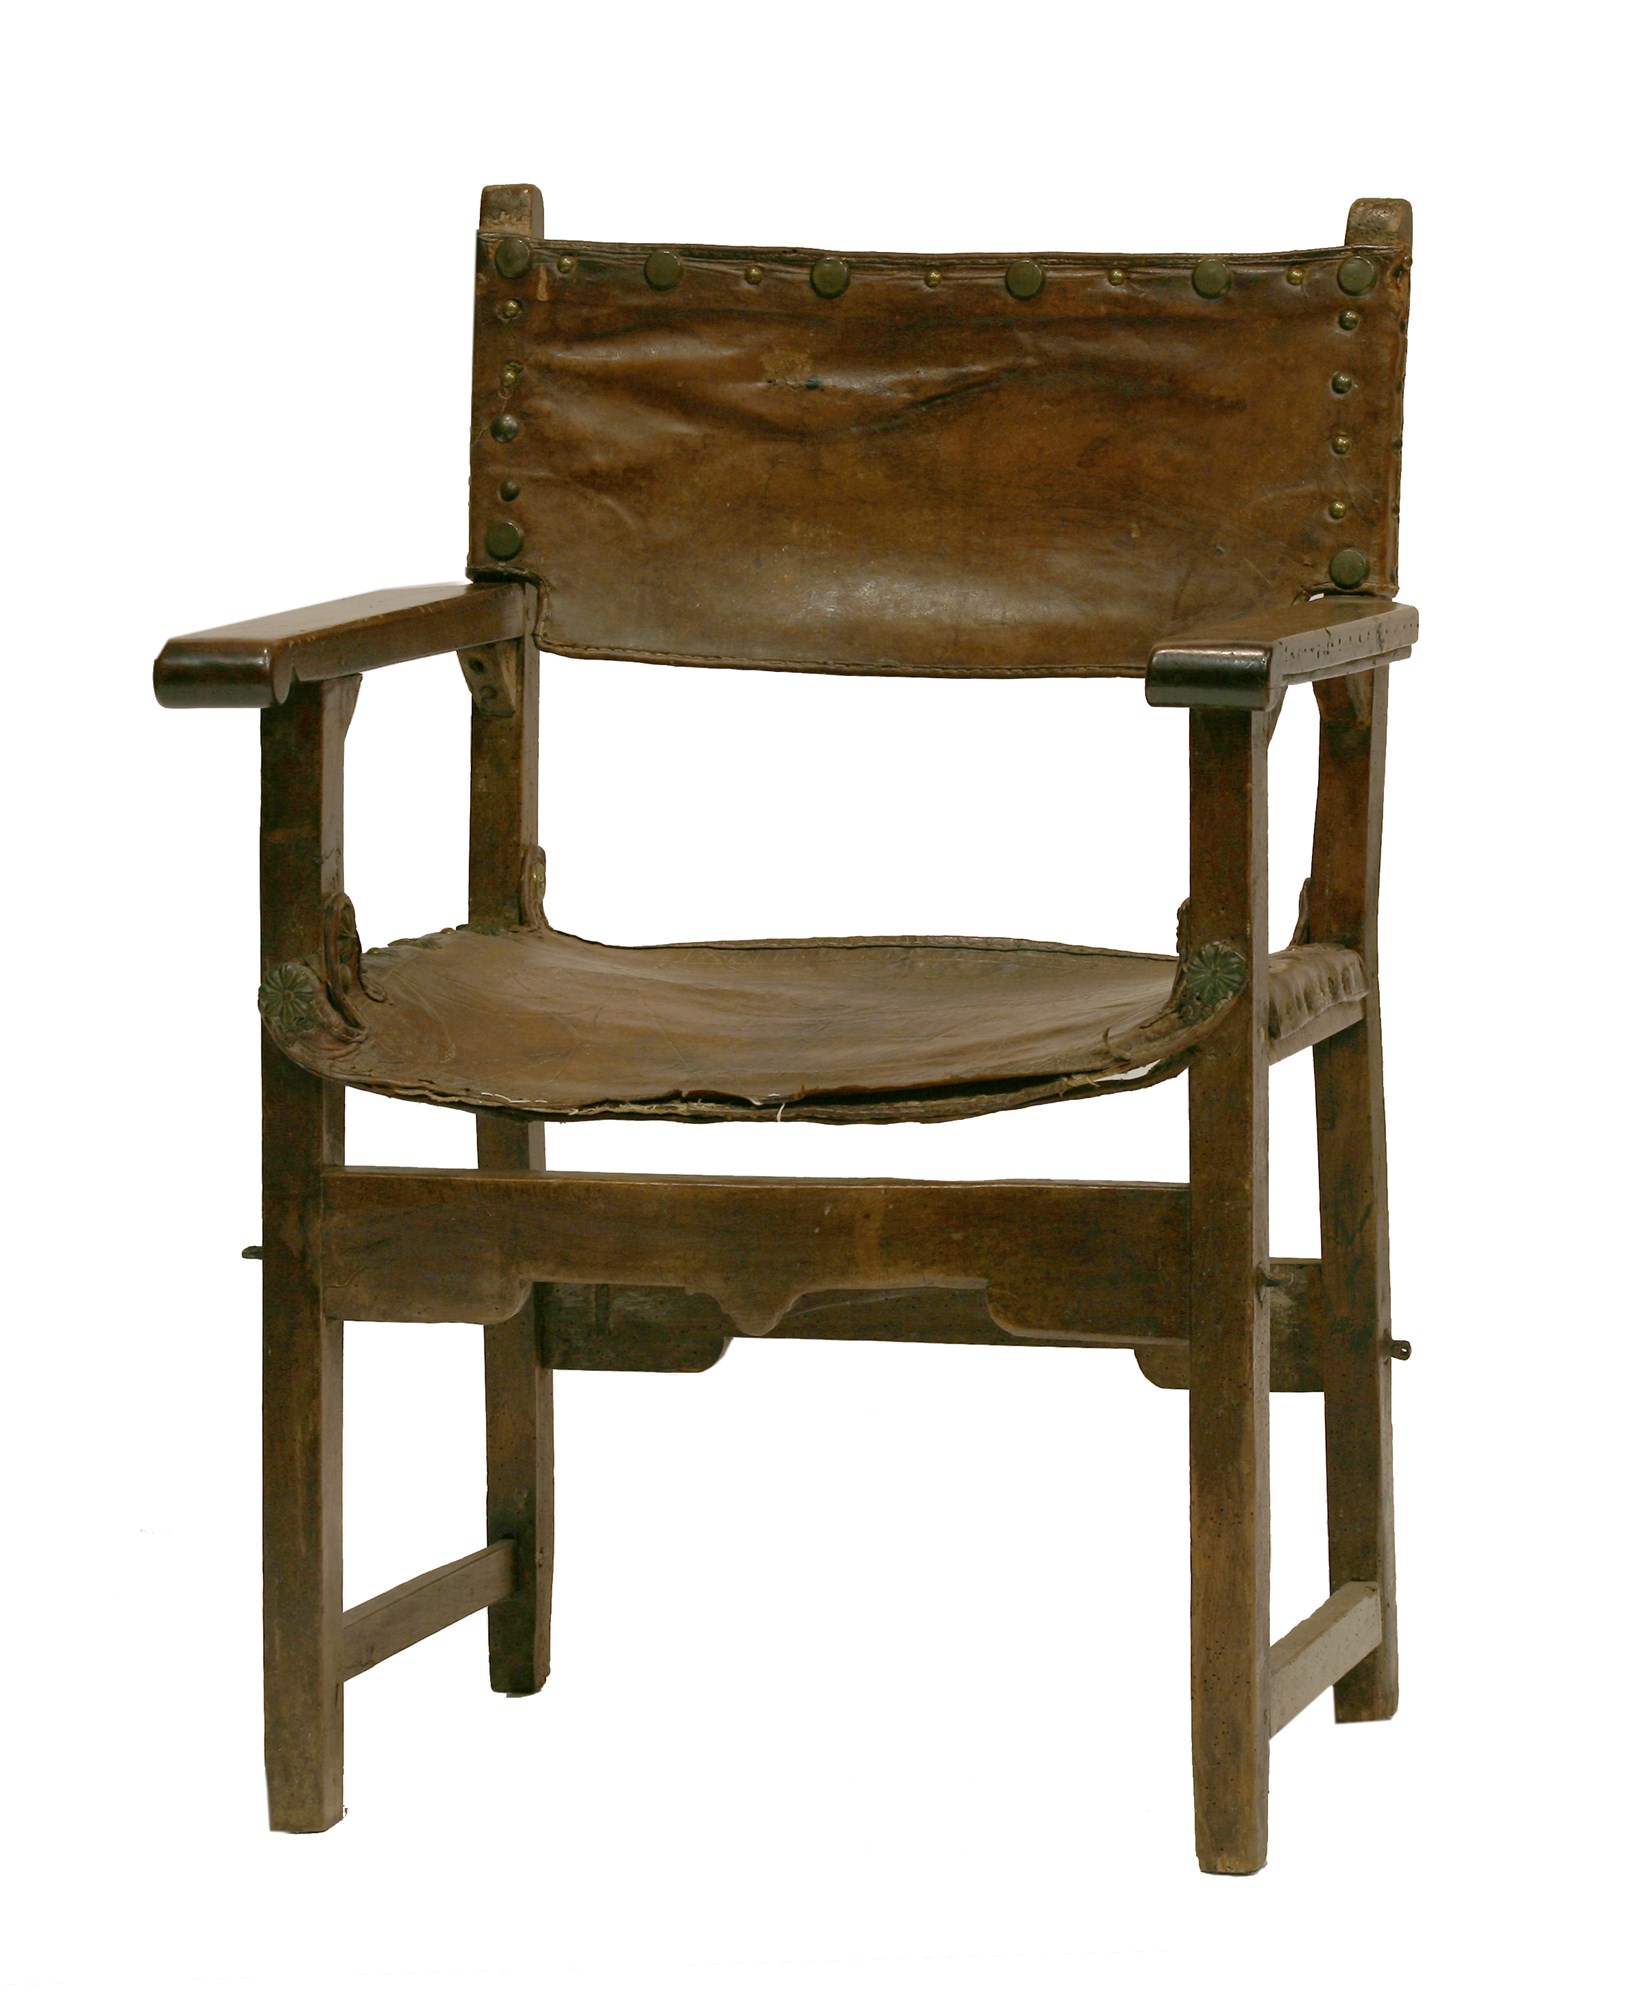 A Spanish walnut open elbow chair (£470)